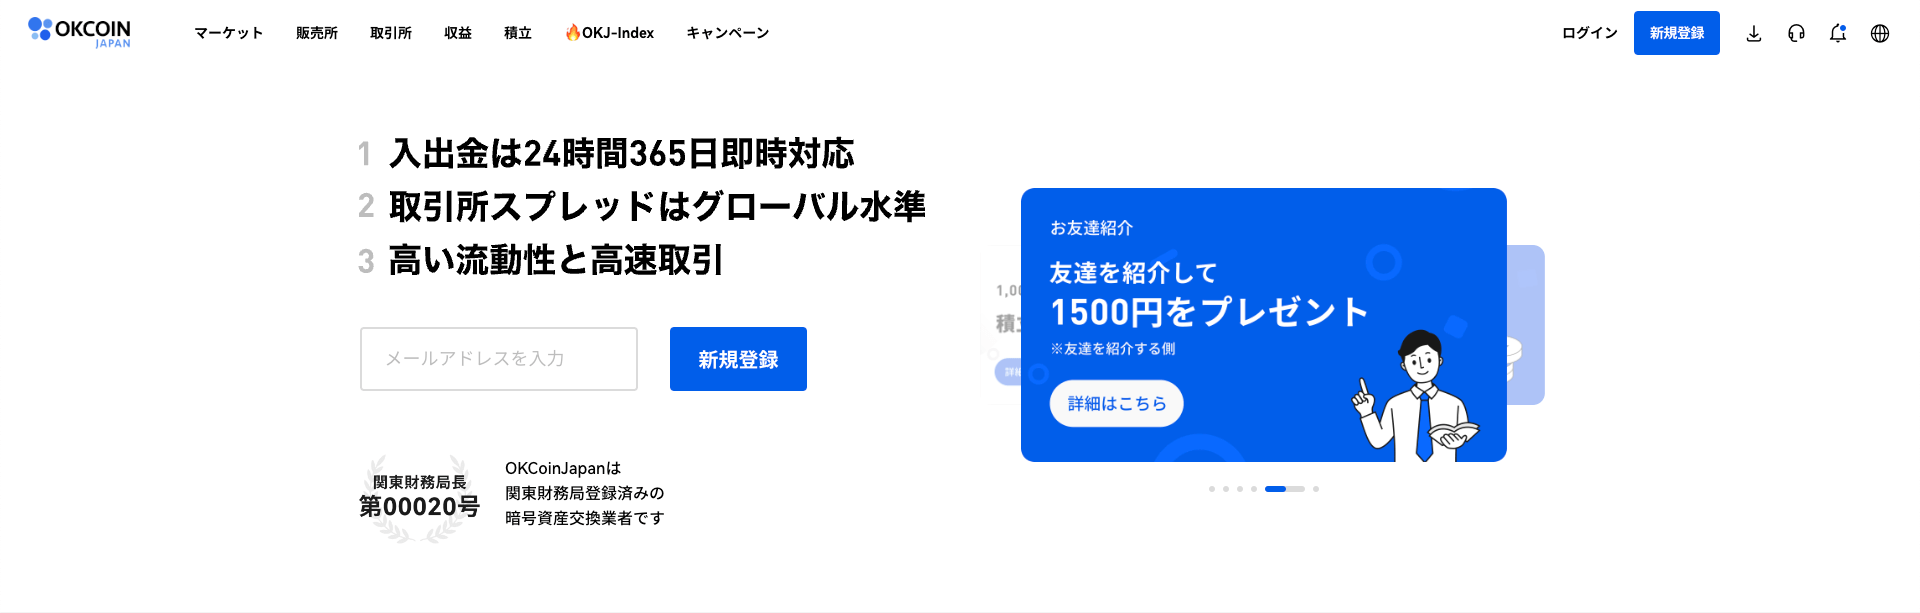 OKCoinJapan 公式サイト